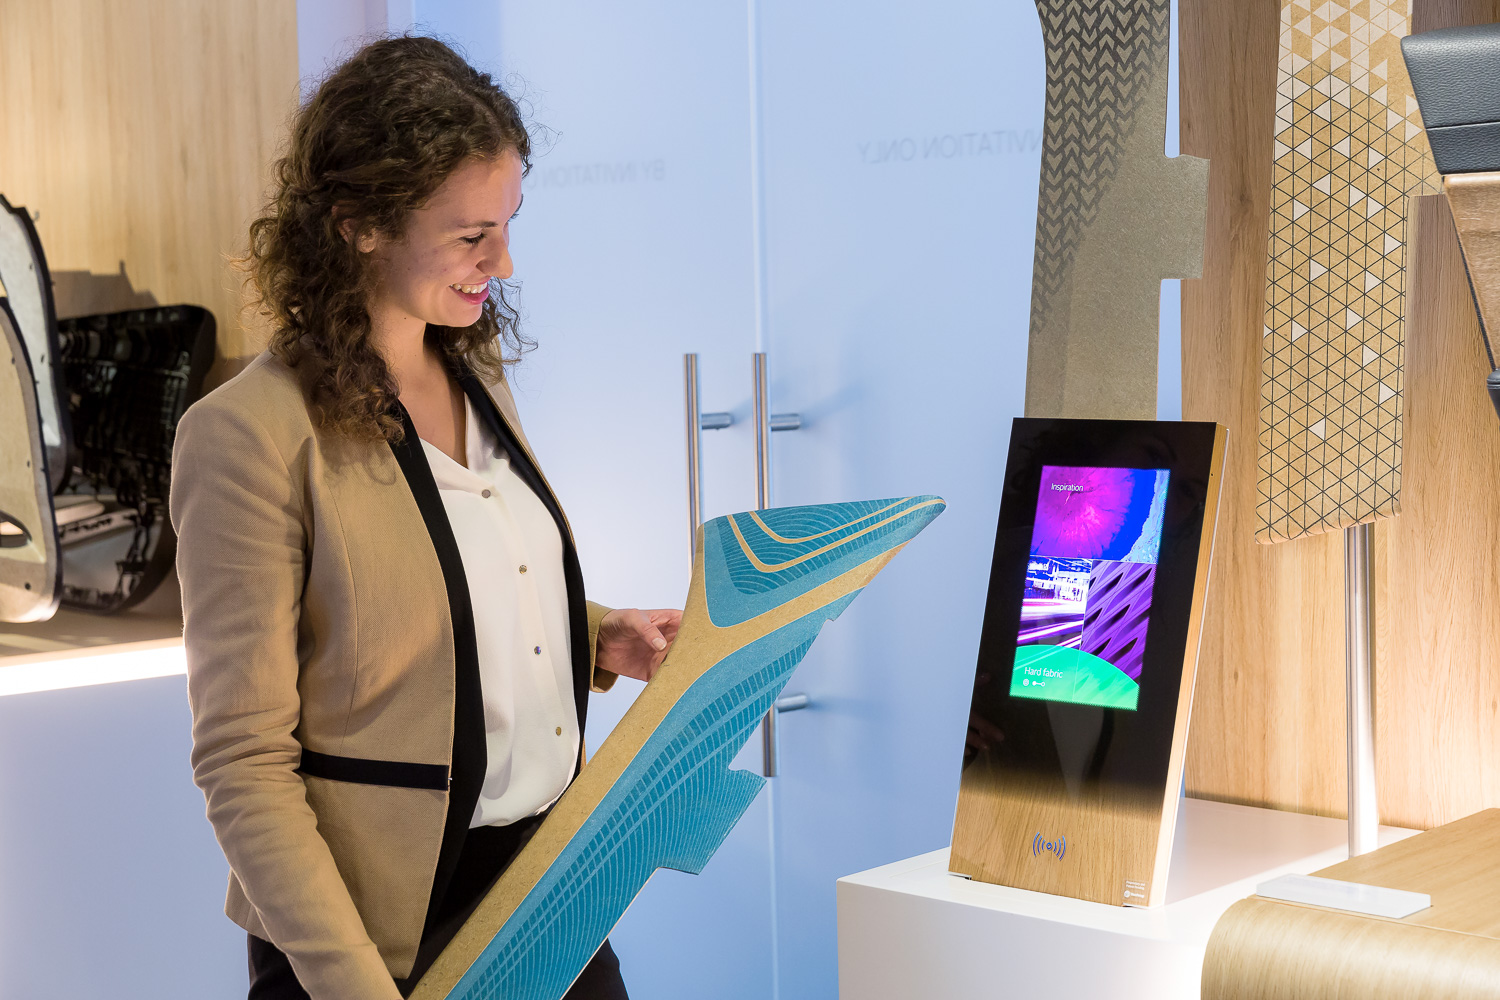 Woman receives more information about an exhibit via Sensor technology